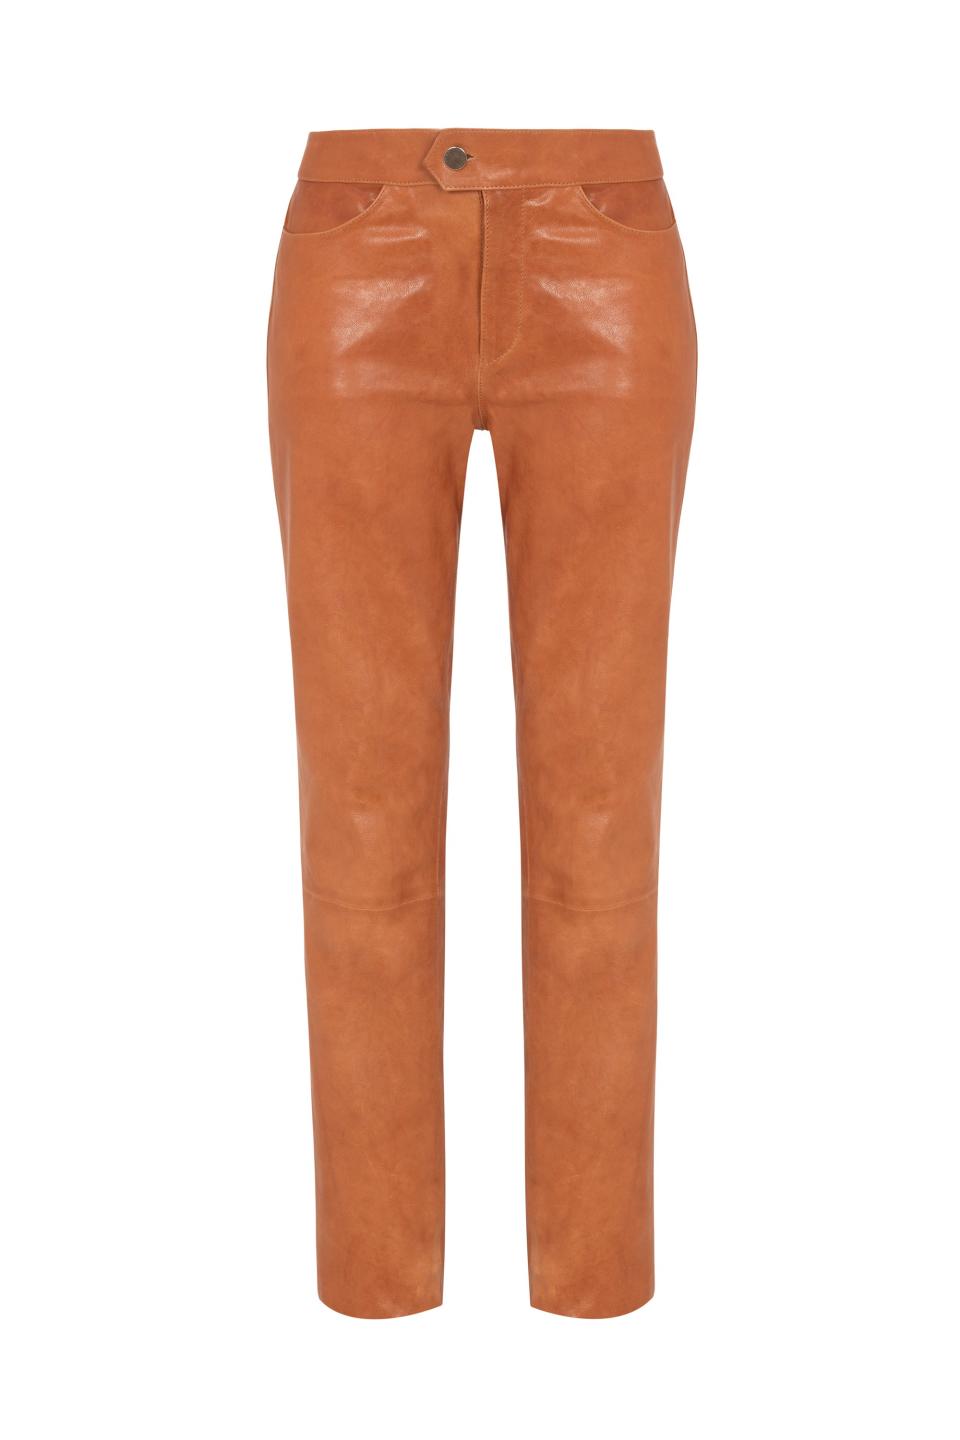 SKIIM Jean trouser (£920)